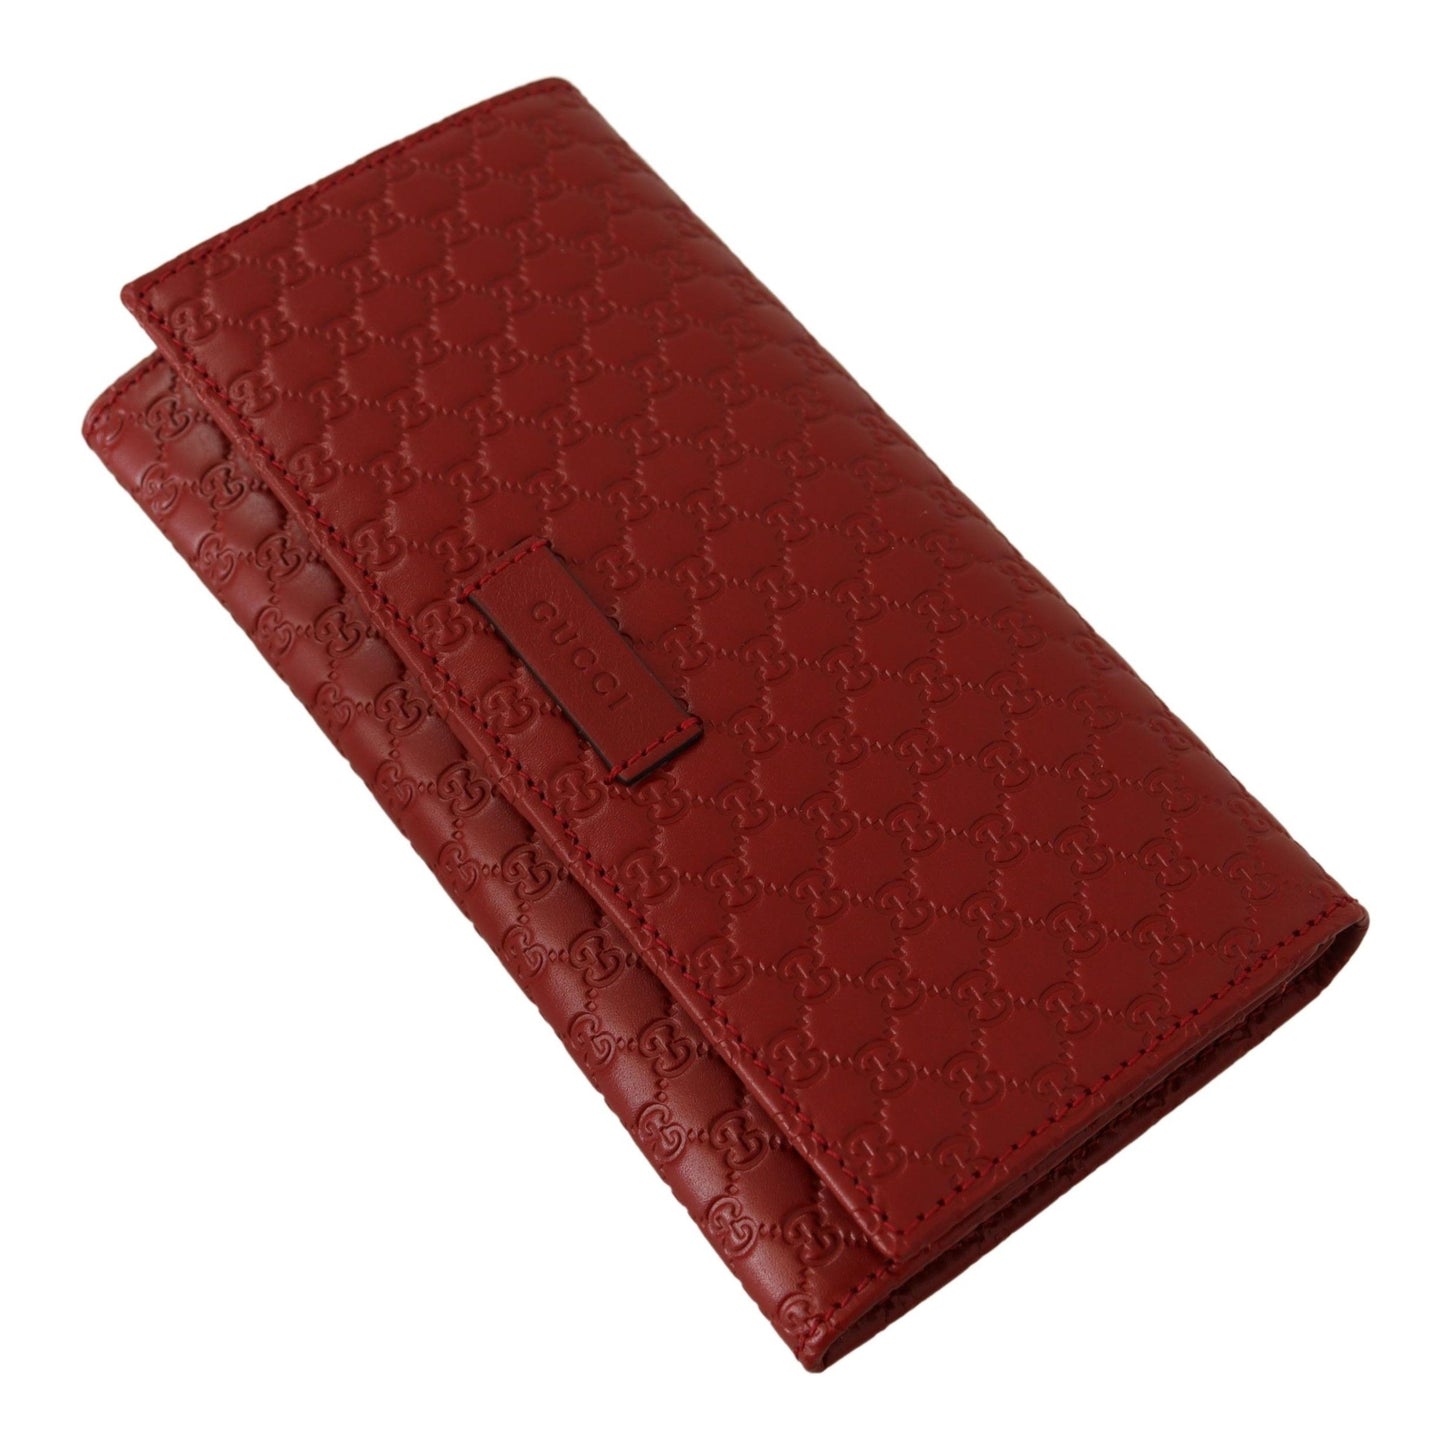 Elegant Red Leather Flap Wallet